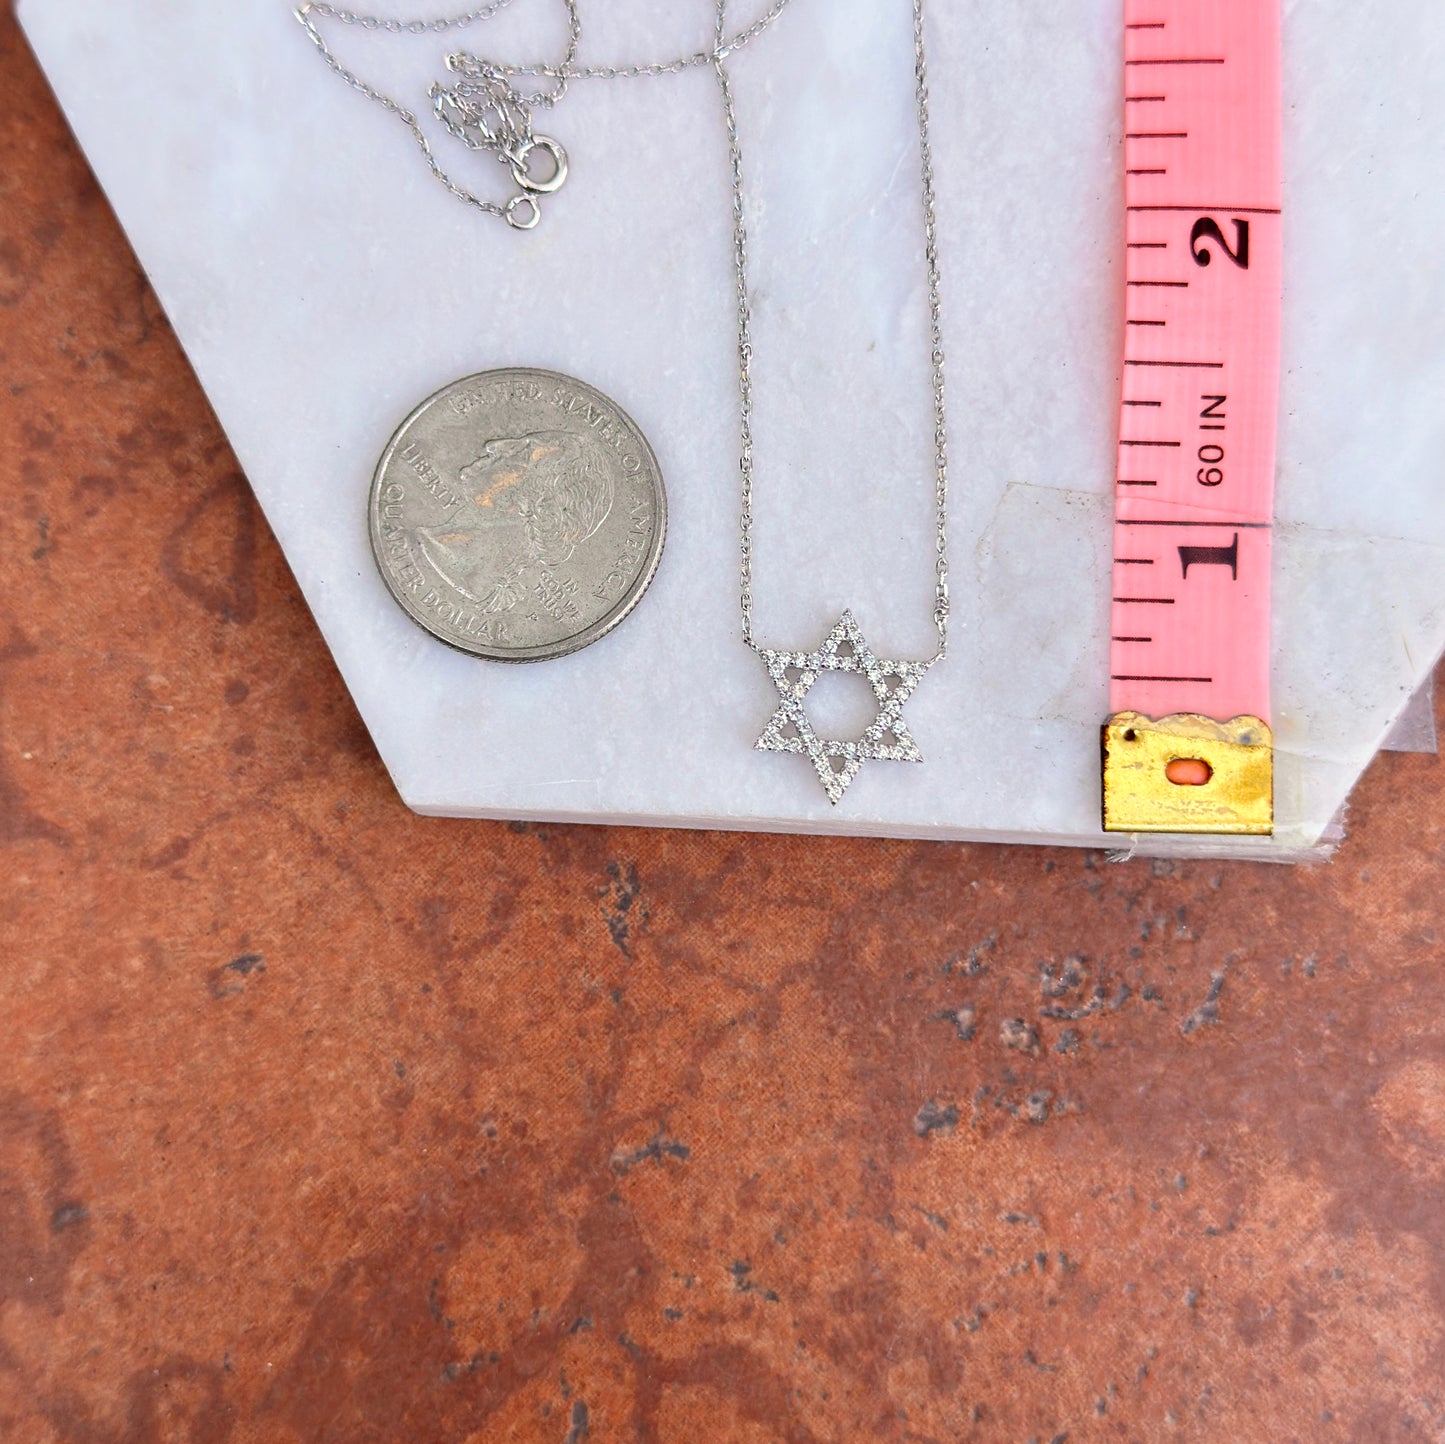 14KT White Gold .25 CT Pave Diamond Star of David Necklace